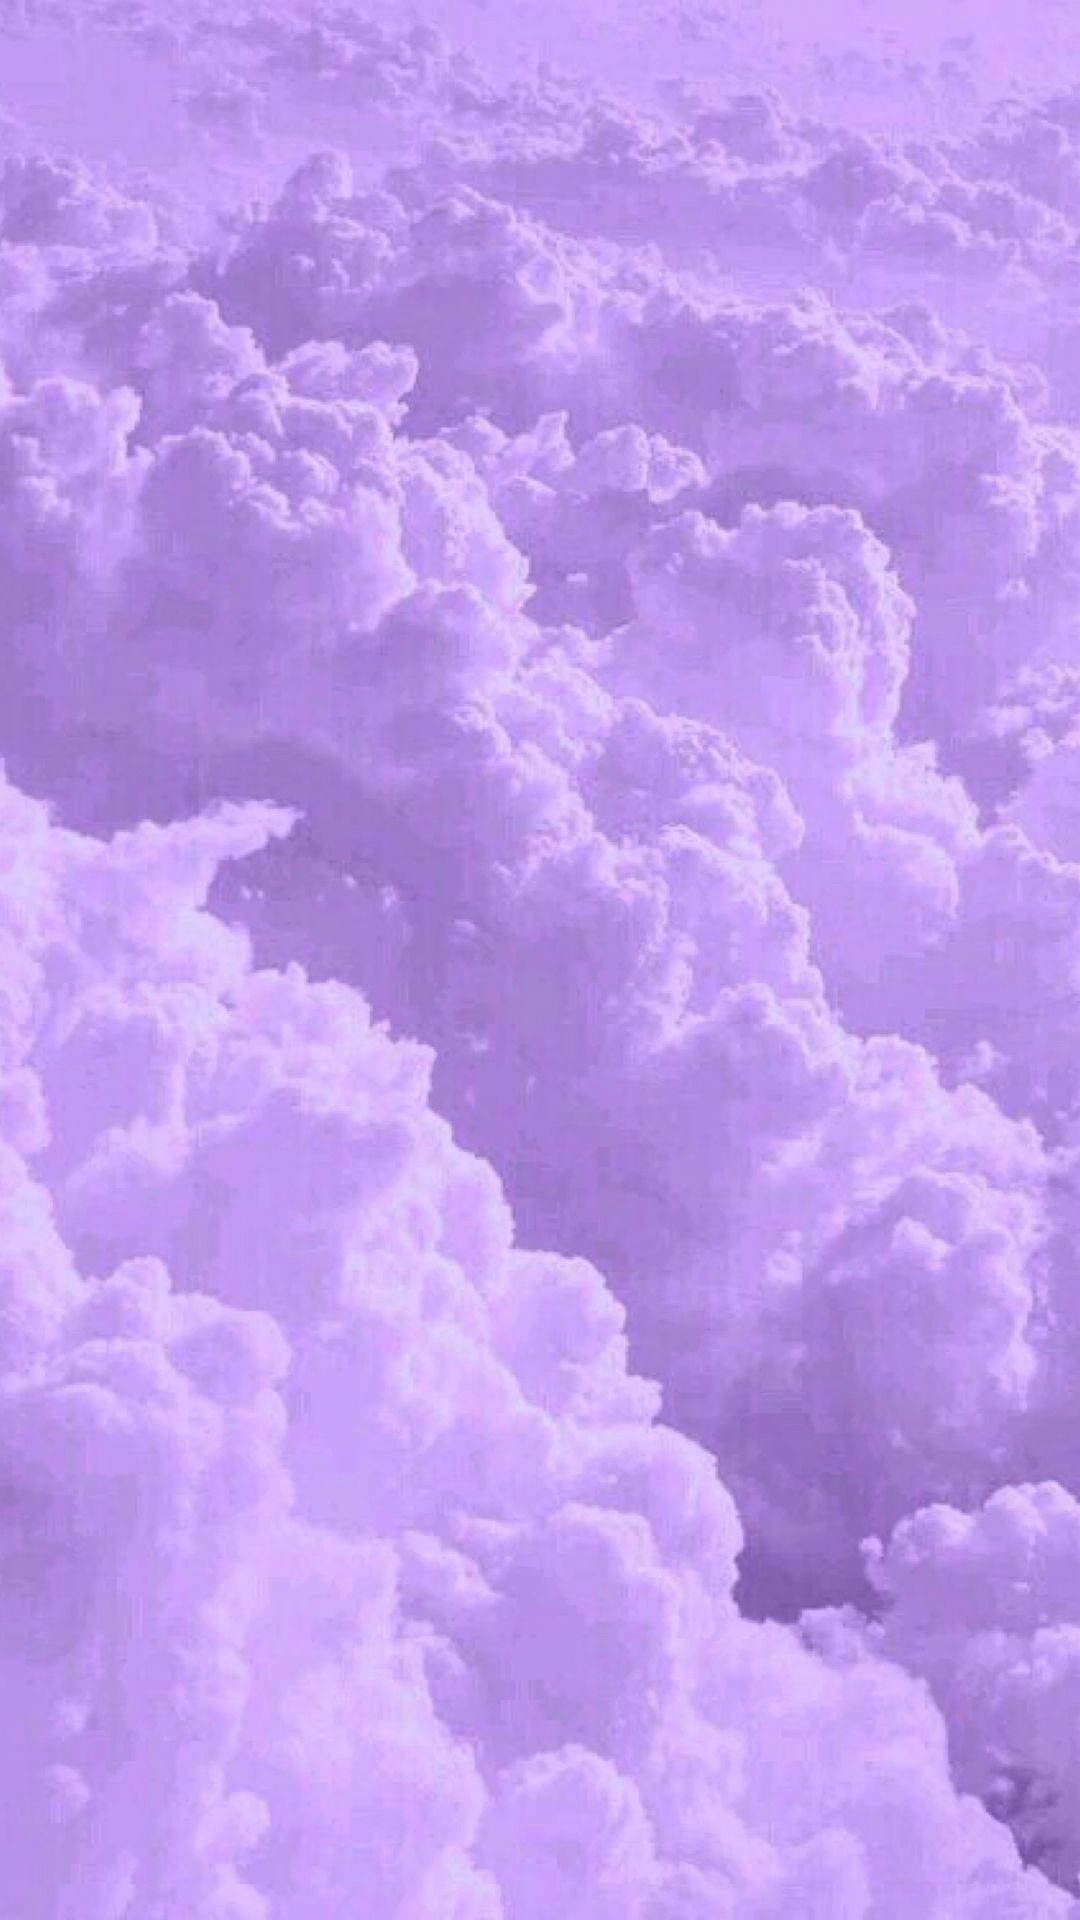 100+] Light Purple Aesthetic Background s 